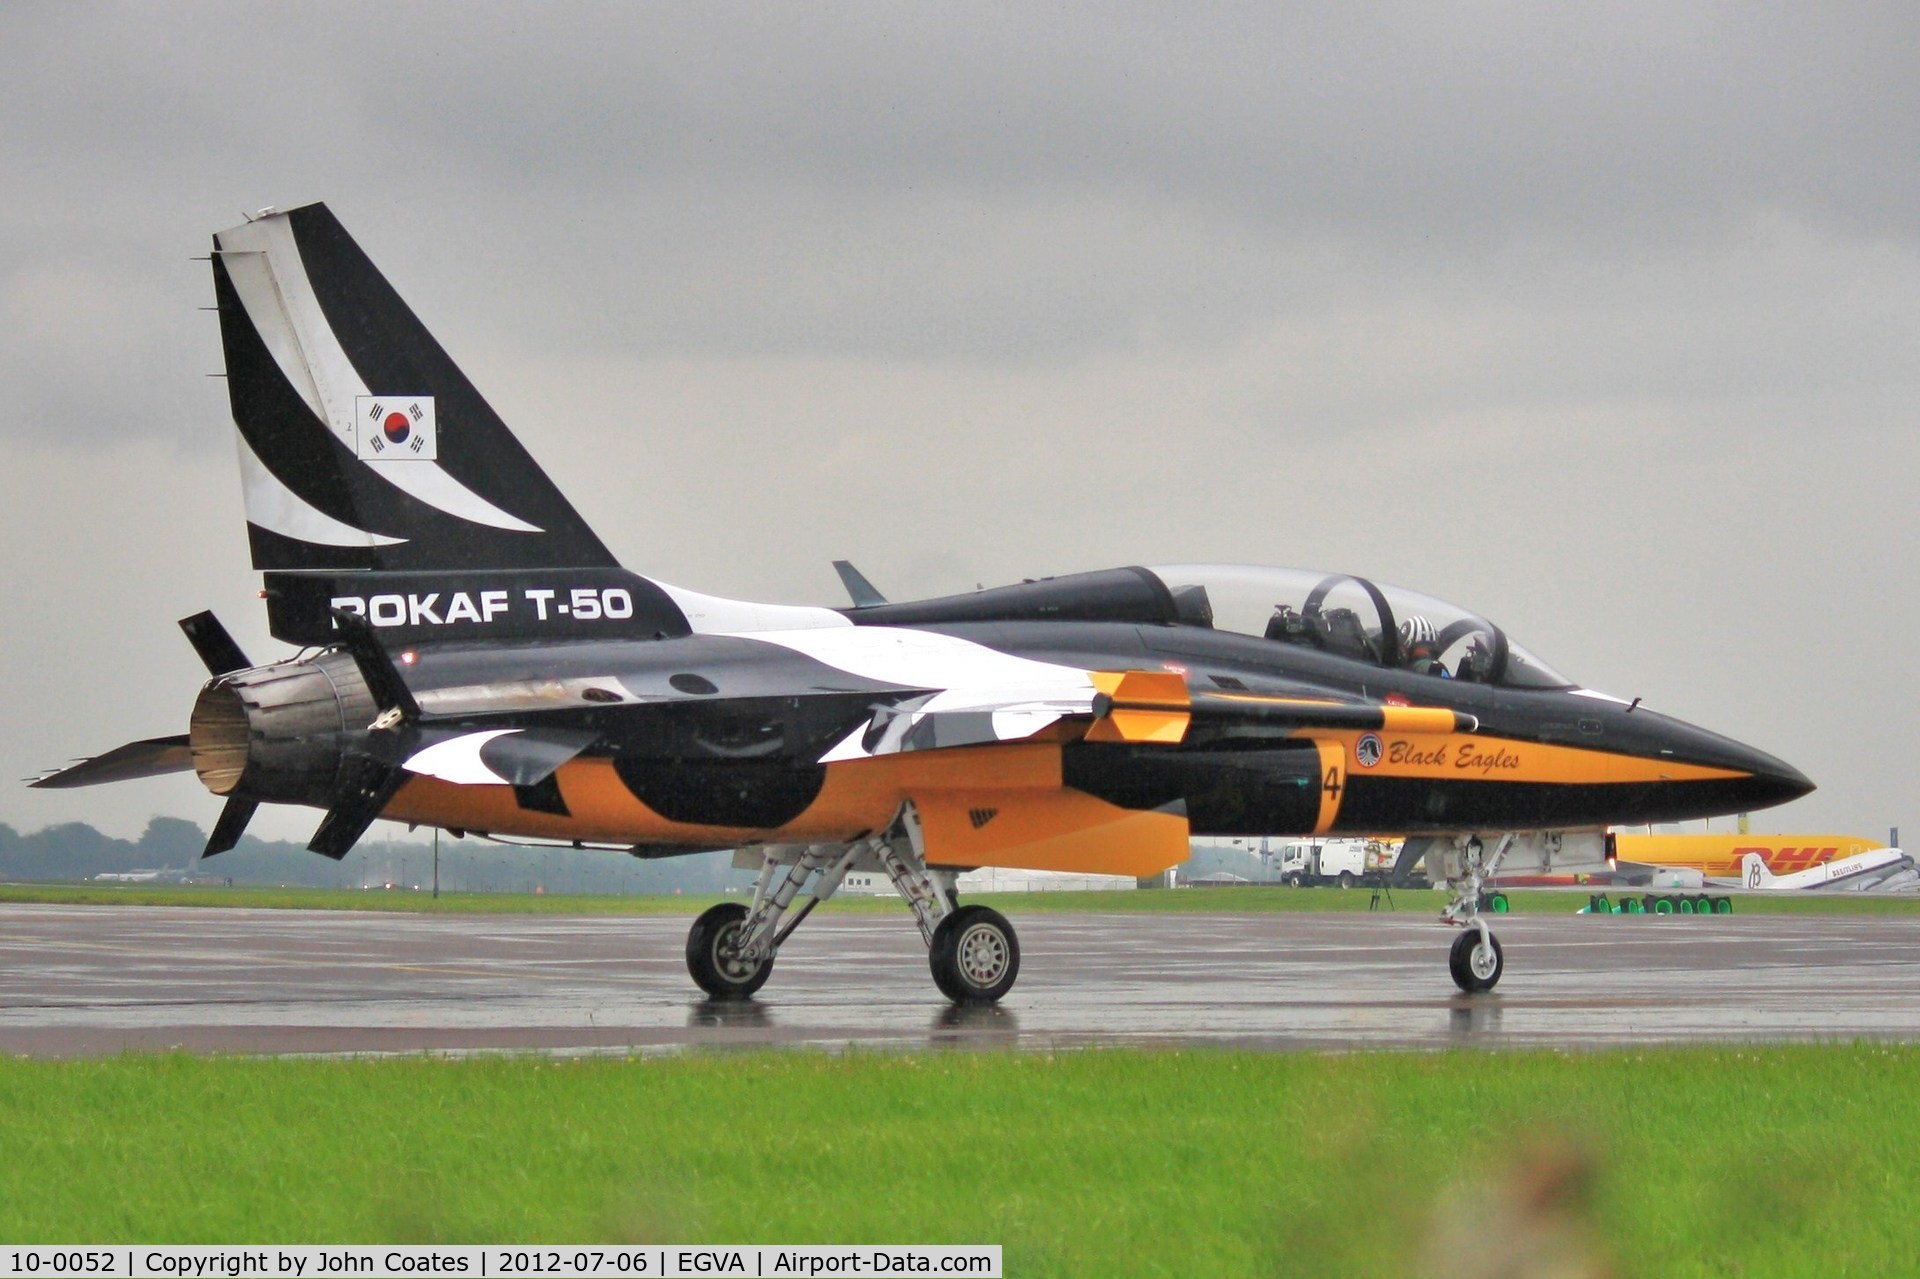 10-0052, 2010 Korean Aerospace Industries T-50B Golden Eagle C/N KA-052, Wet RIAT practice